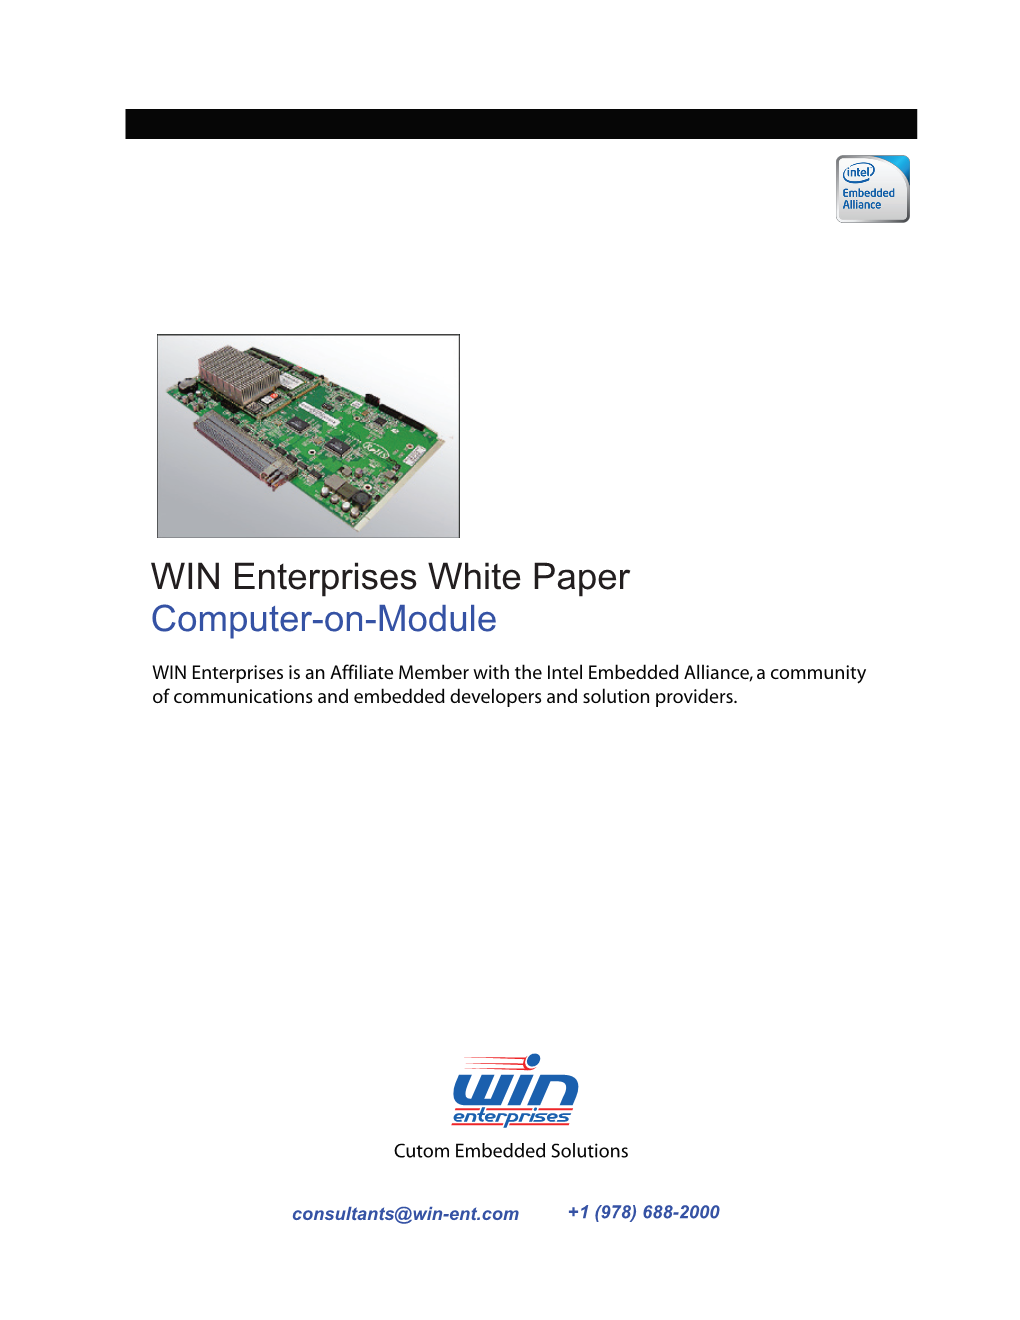 WIN Enterprises White Paper Computer-On-Module